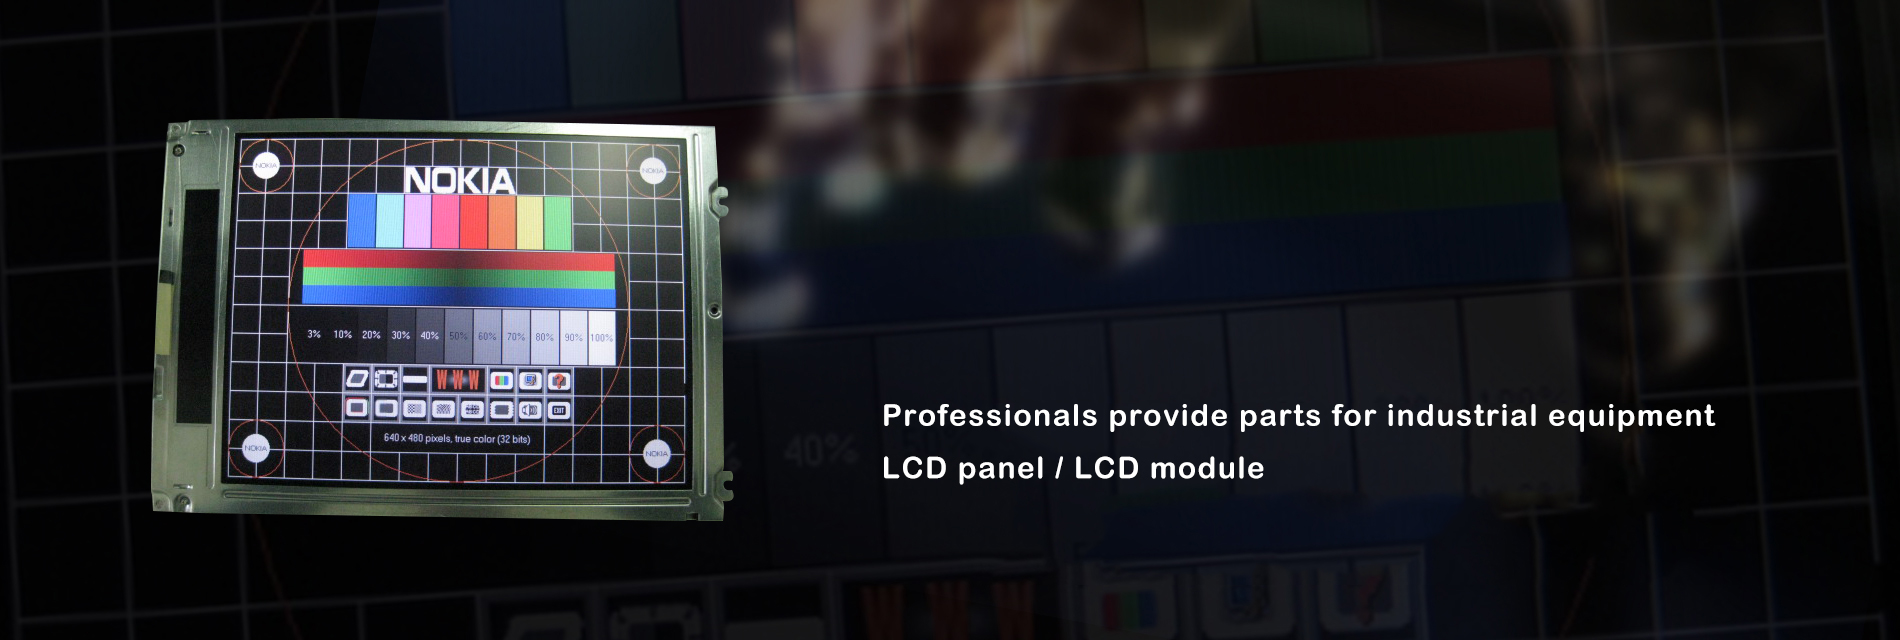 LCD panel/LCD module